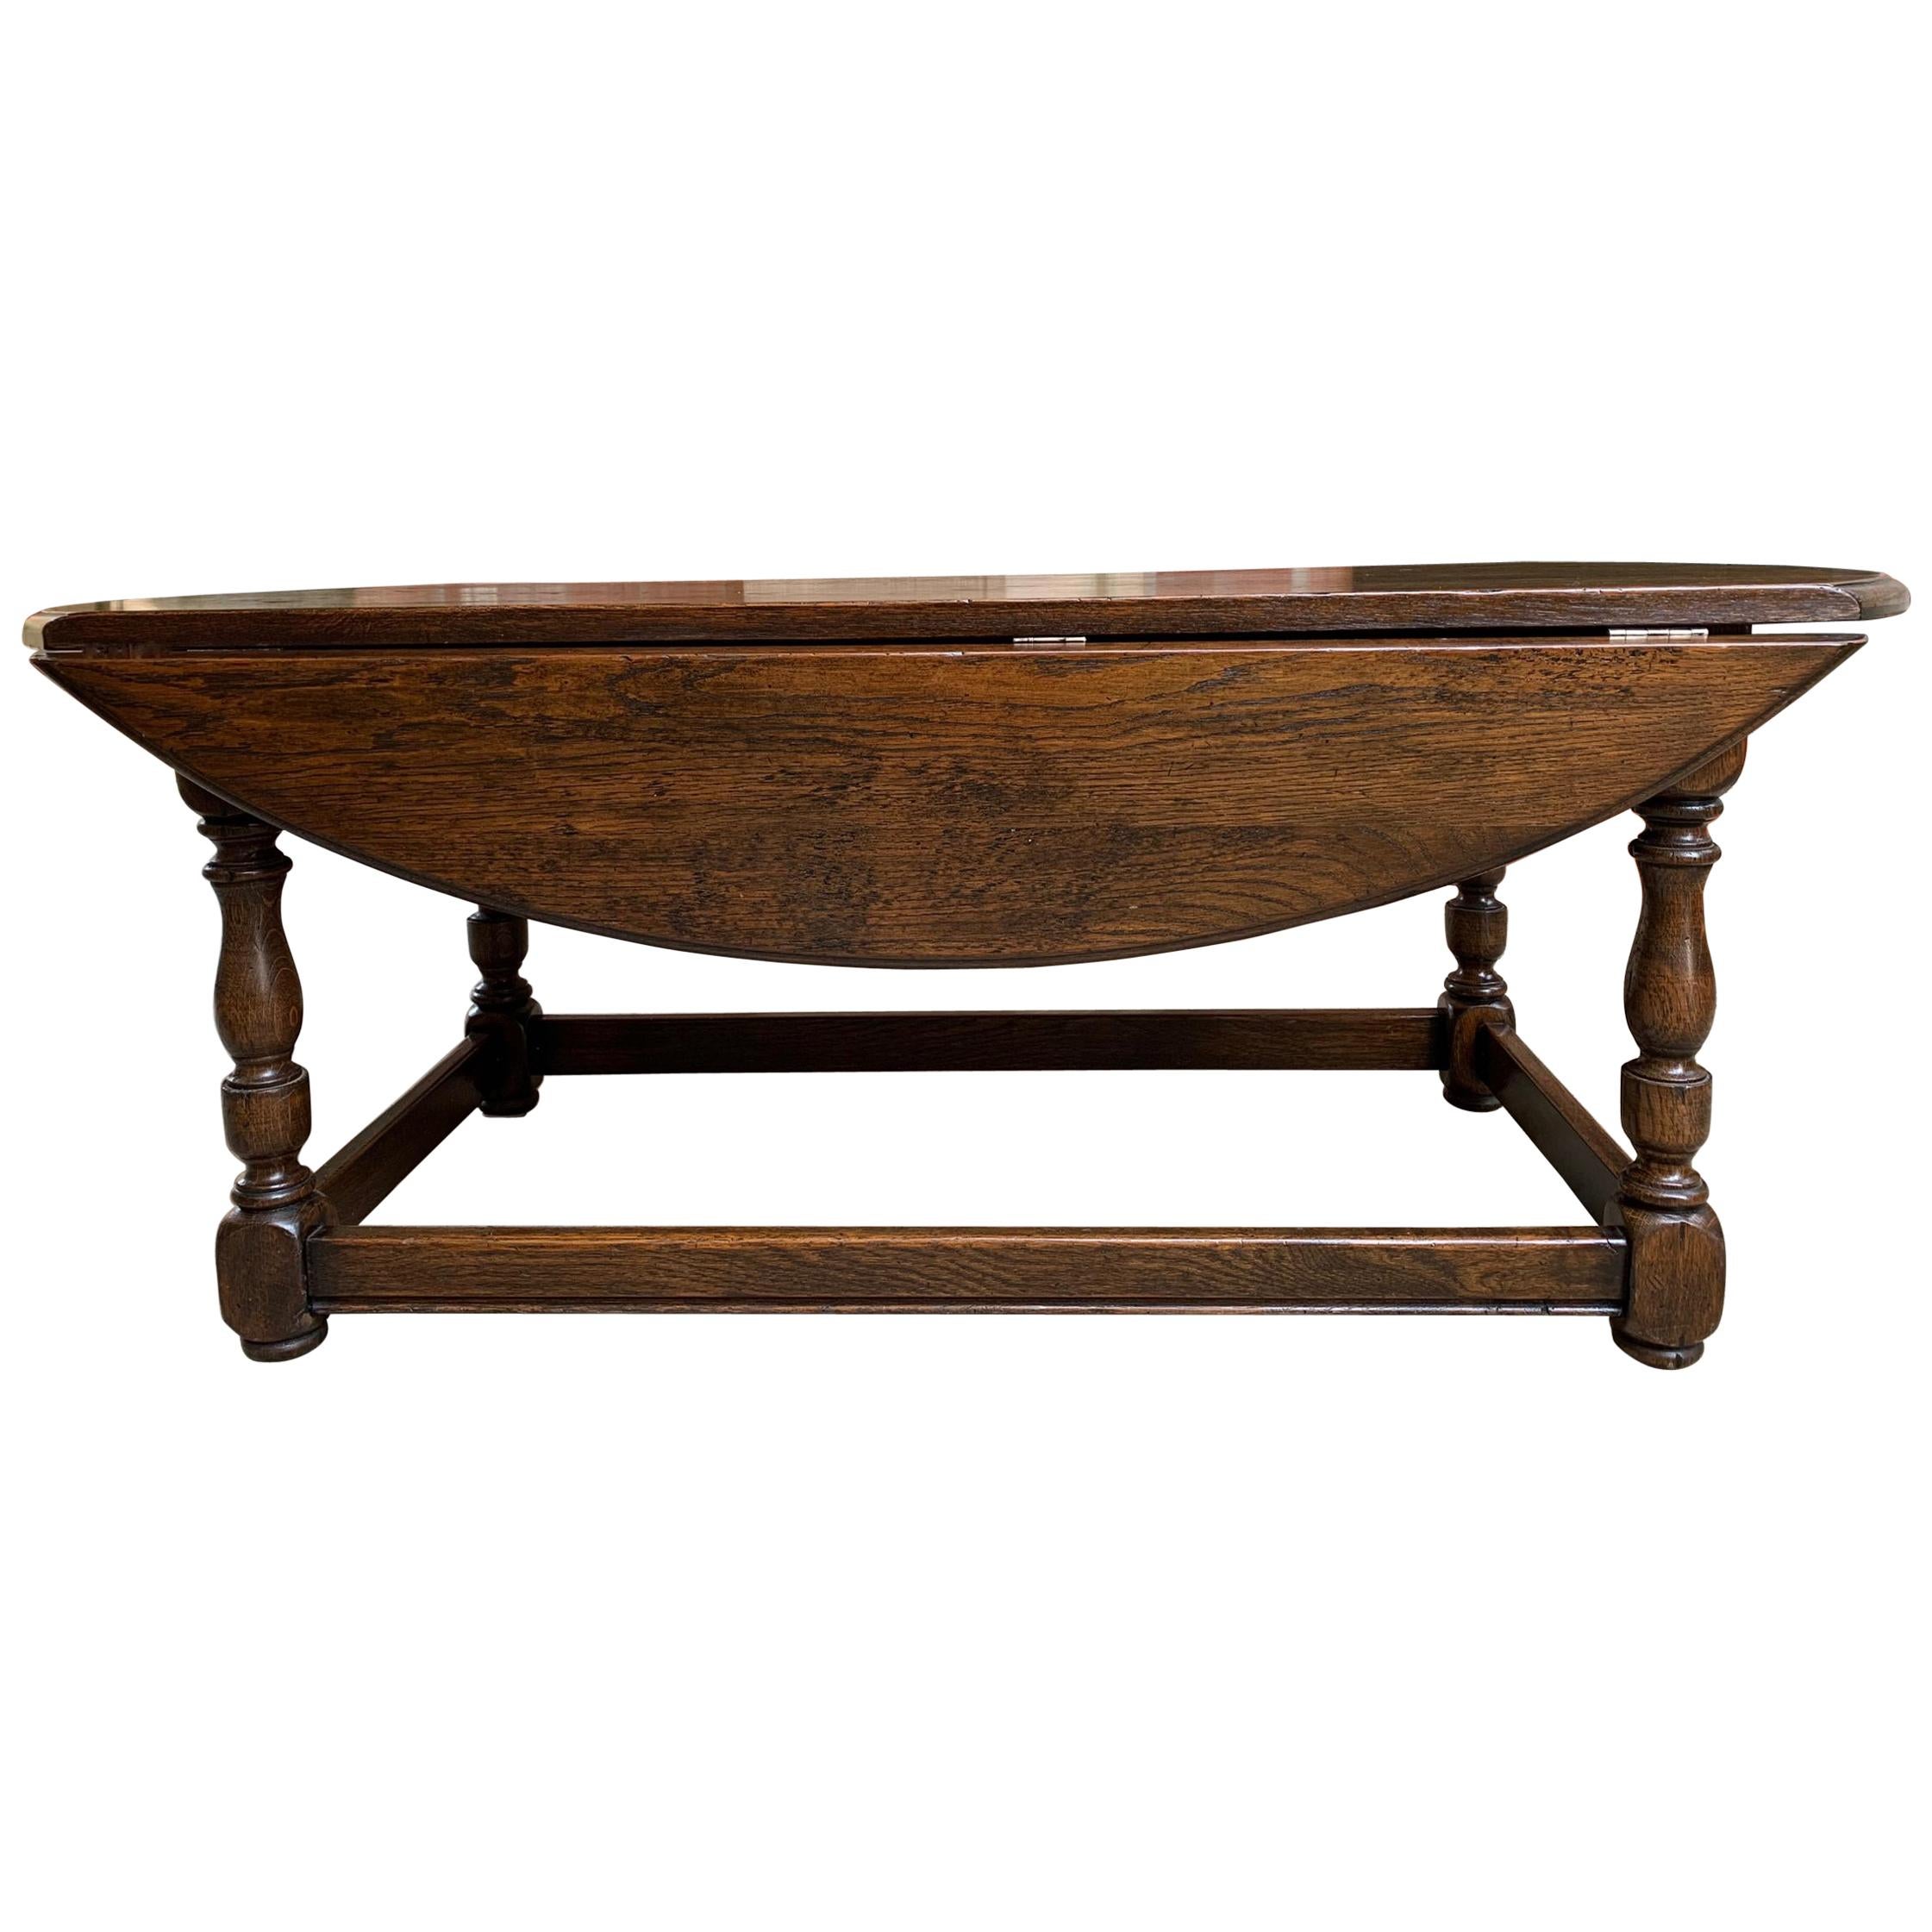 Vintage English Coffee Table Slender Drop-Leaf Jacobean Wake Table Style Oval